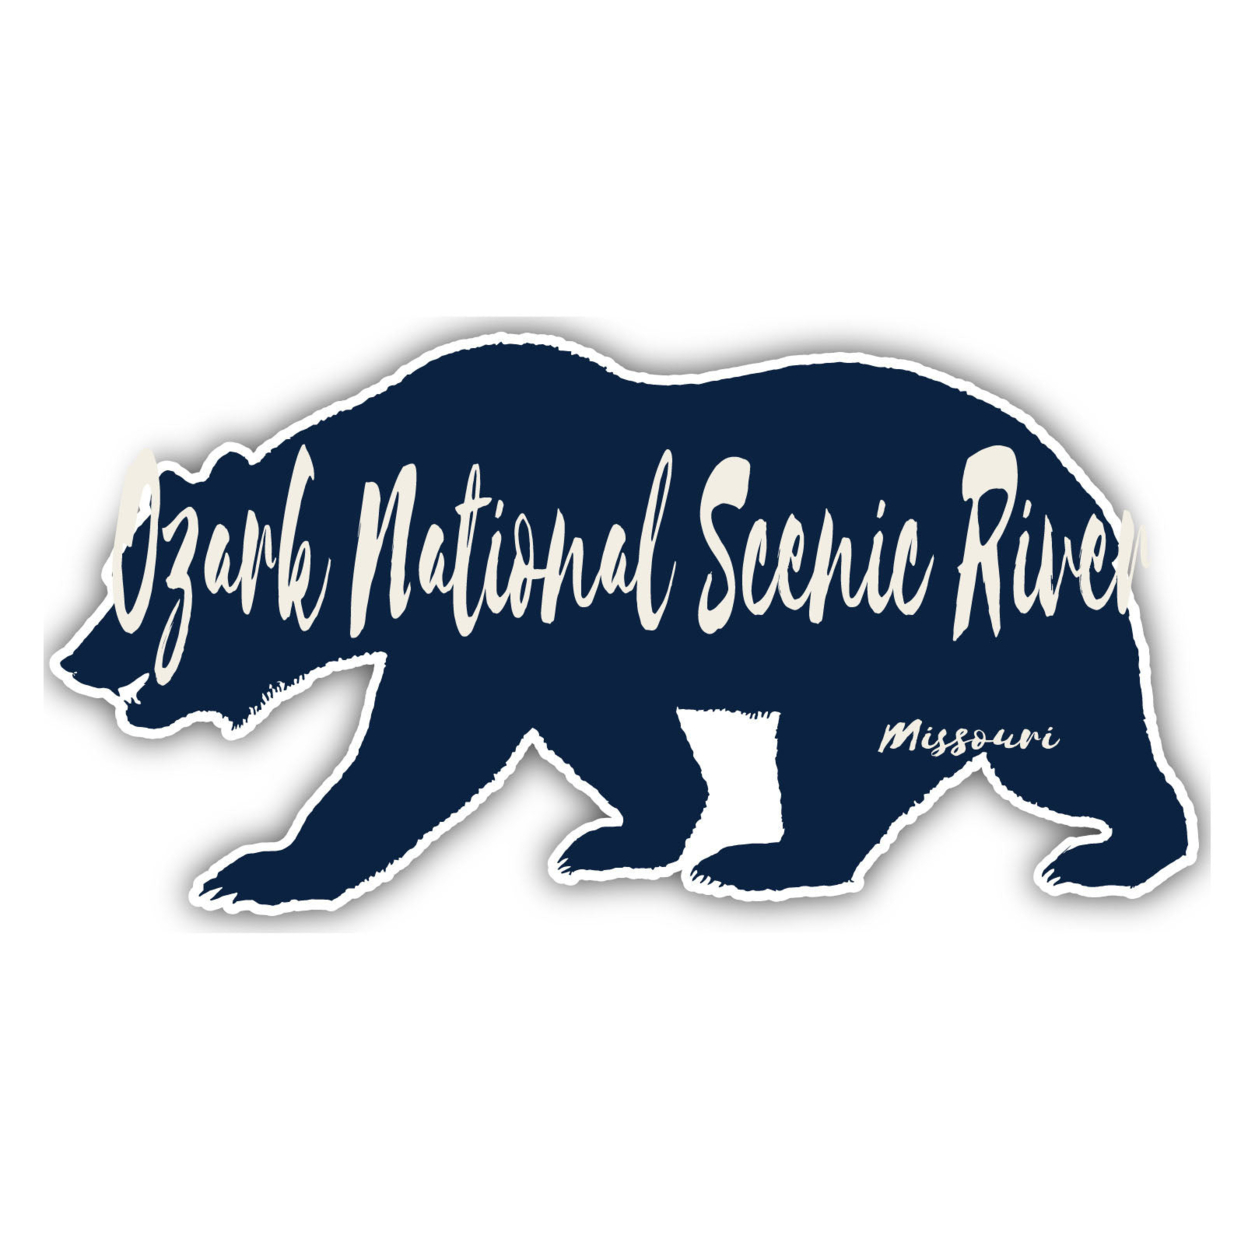 Ozark National Scenic River Missouri Souvenir Decorative Stickers (Choose Theme And Size) - Single Unit, 4-Inch, Bear